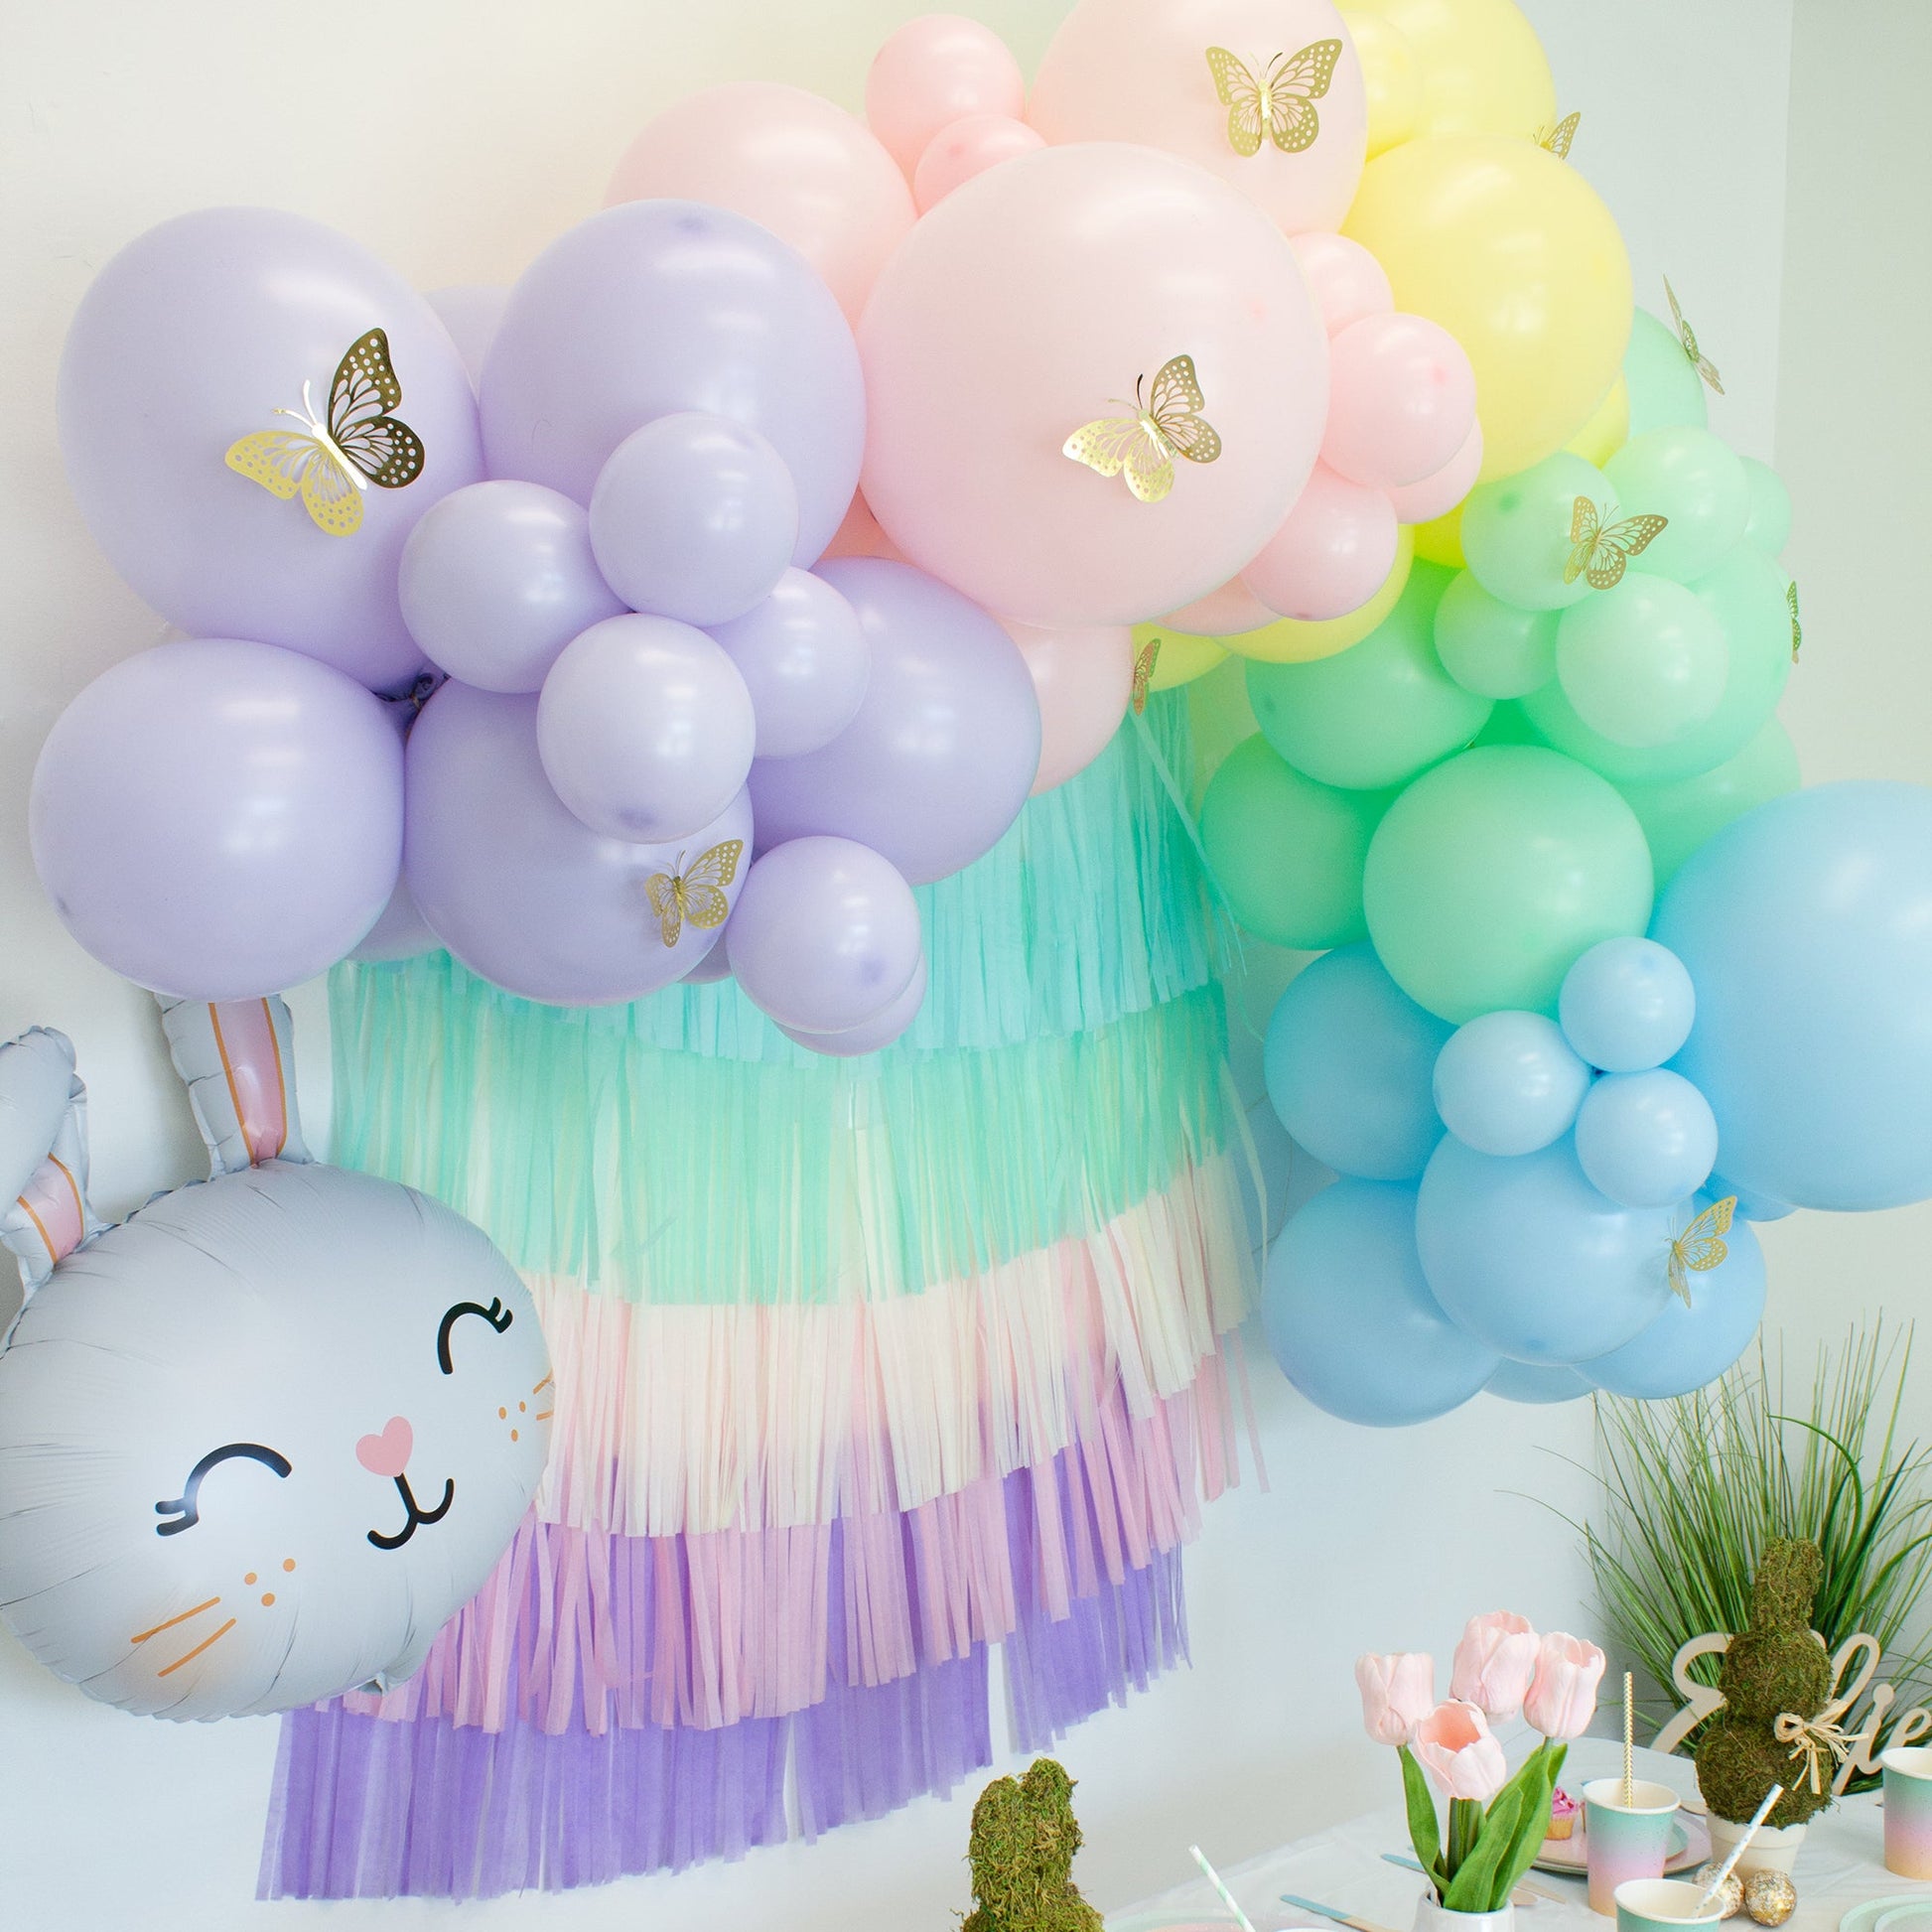 pastel balloons | pastel birthday decorations | pastel rainbow balloons |  rainbow baby | rainbow party decorations